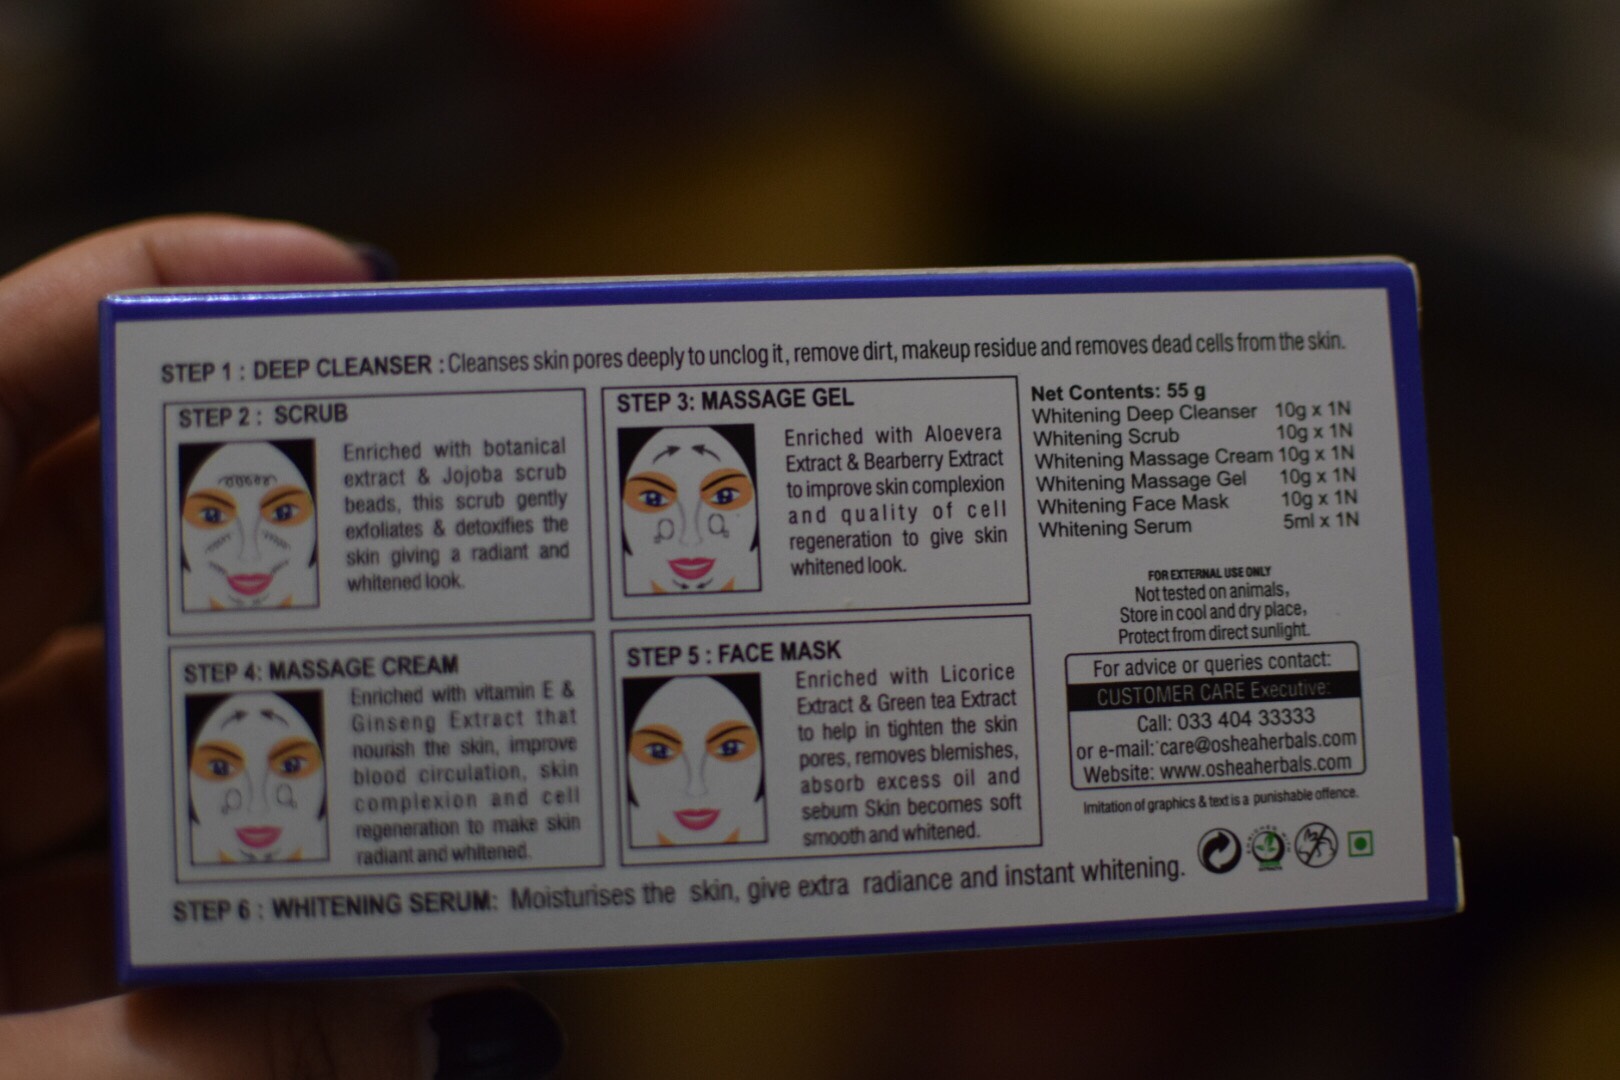 Oshea Herbals Whitening Facial Kit Review